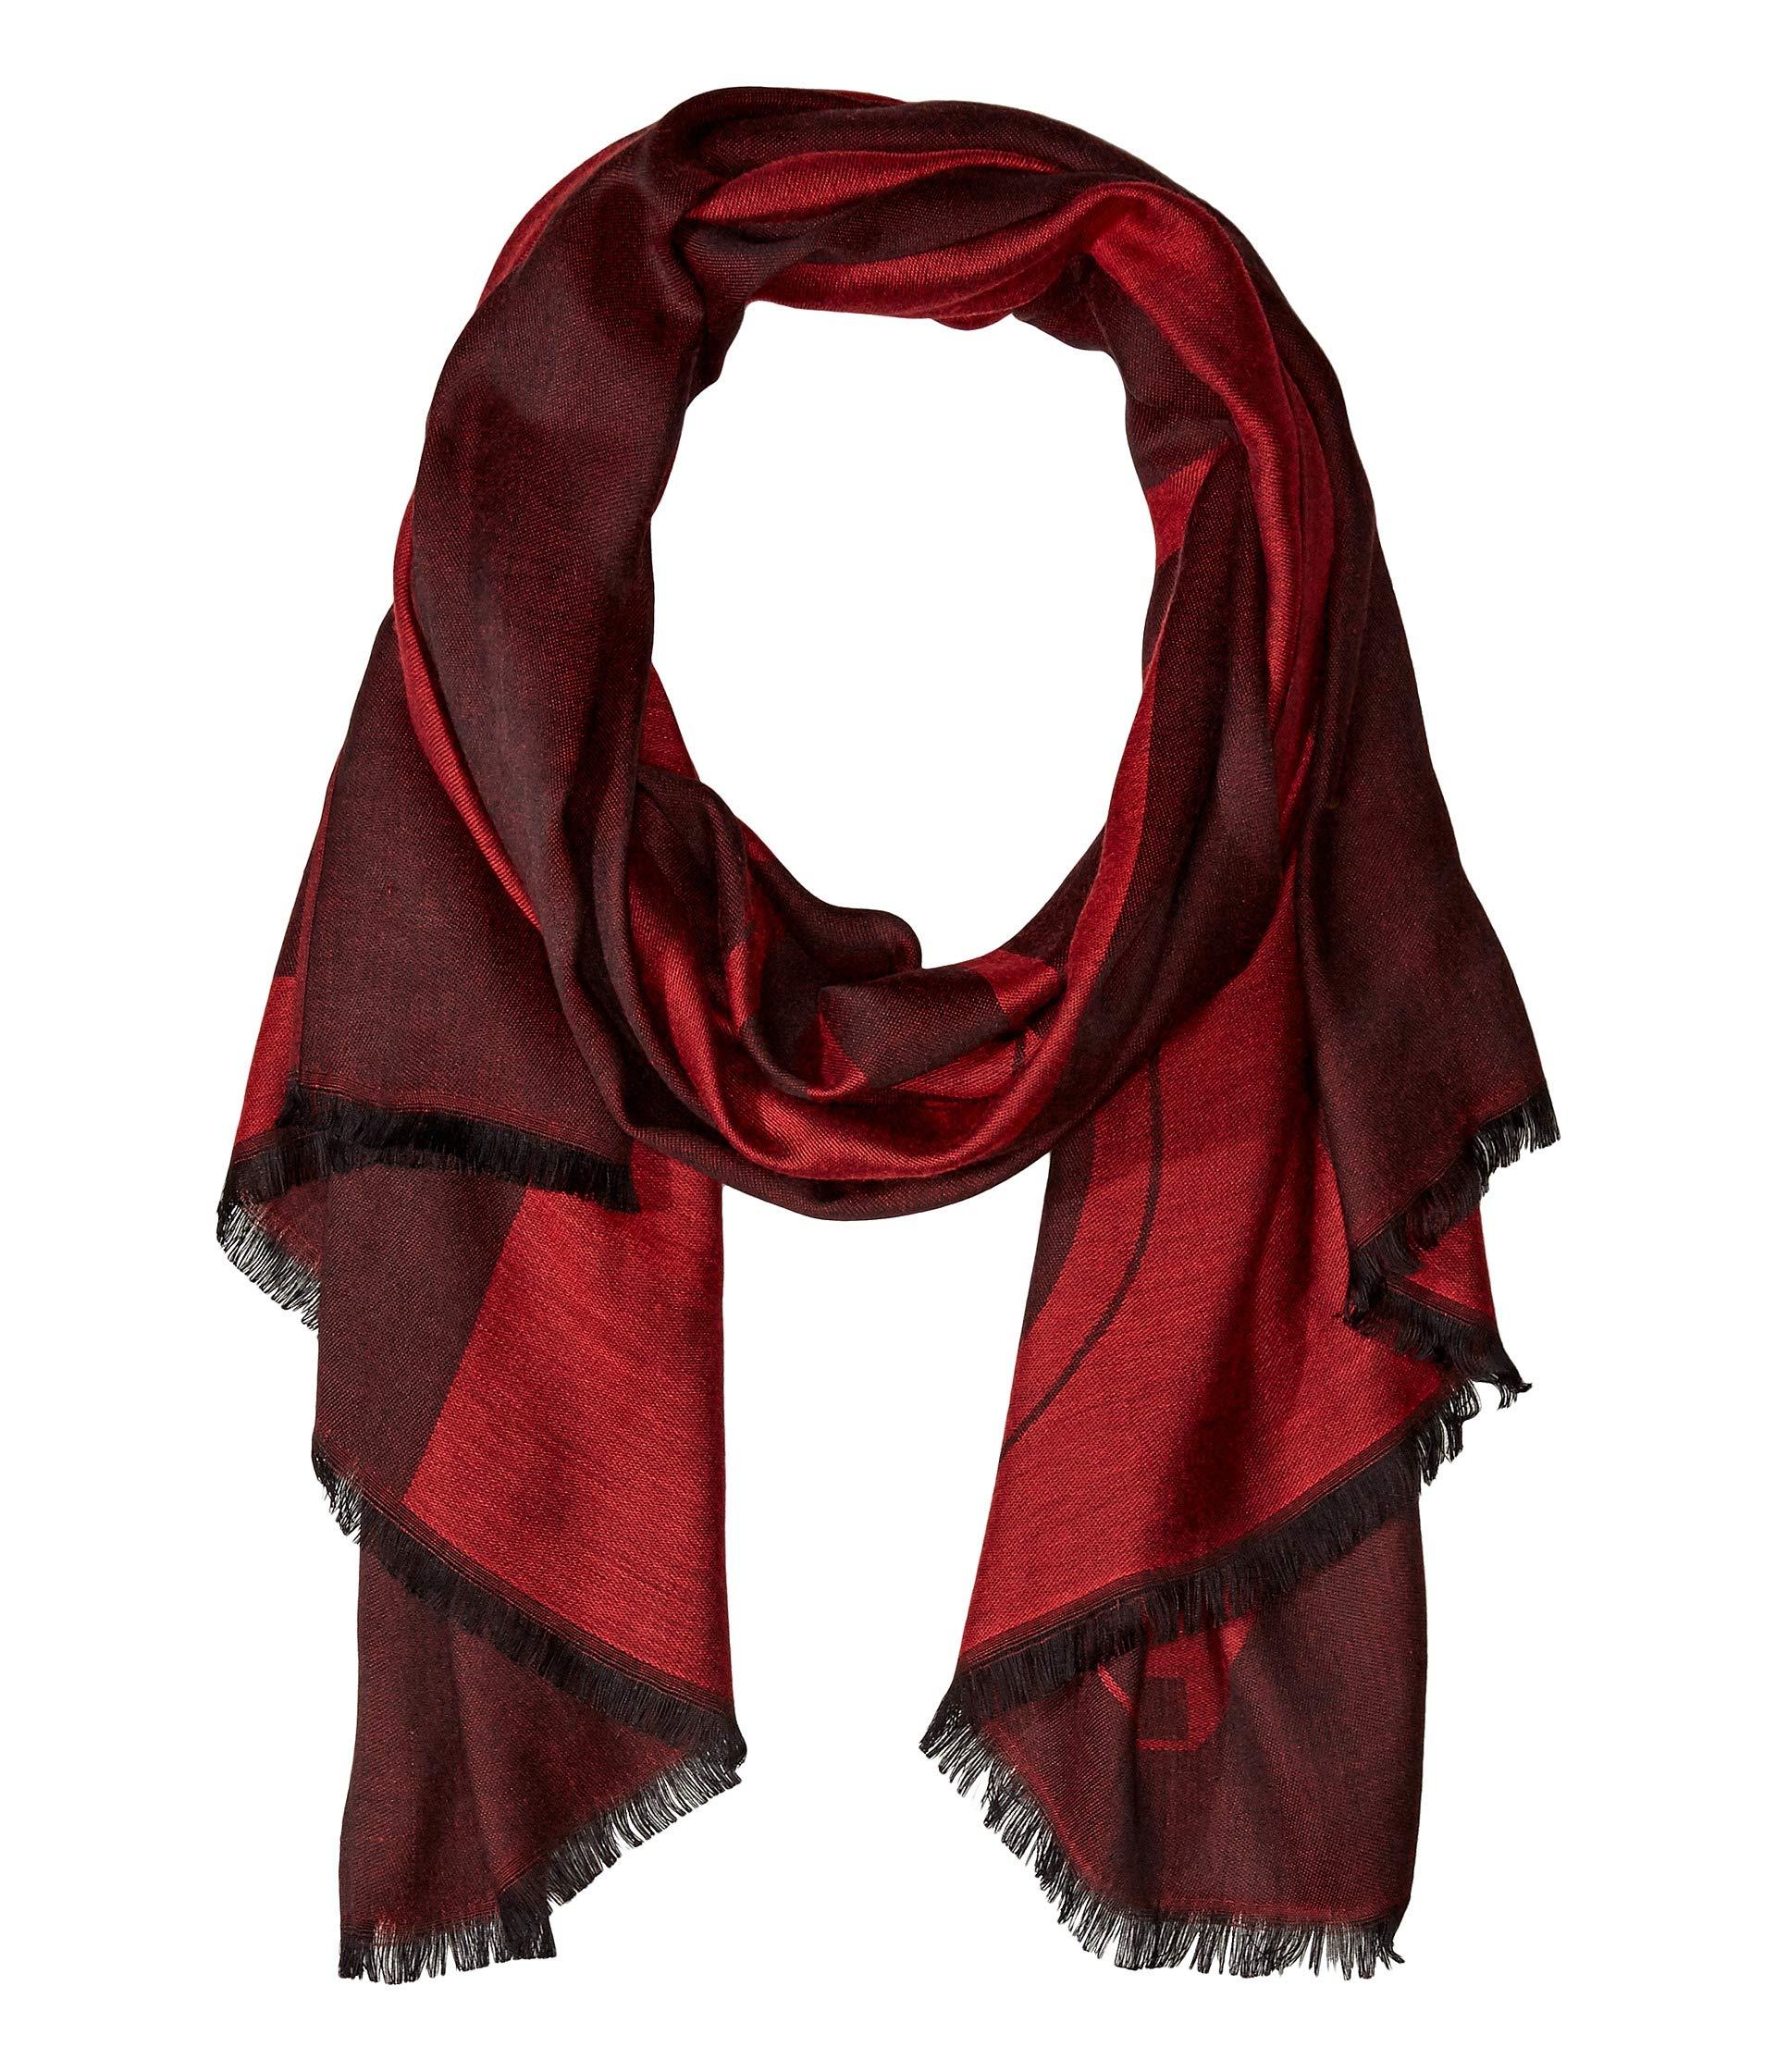 calvin klein red scarf, Off 60%, www.scrimaglio.com